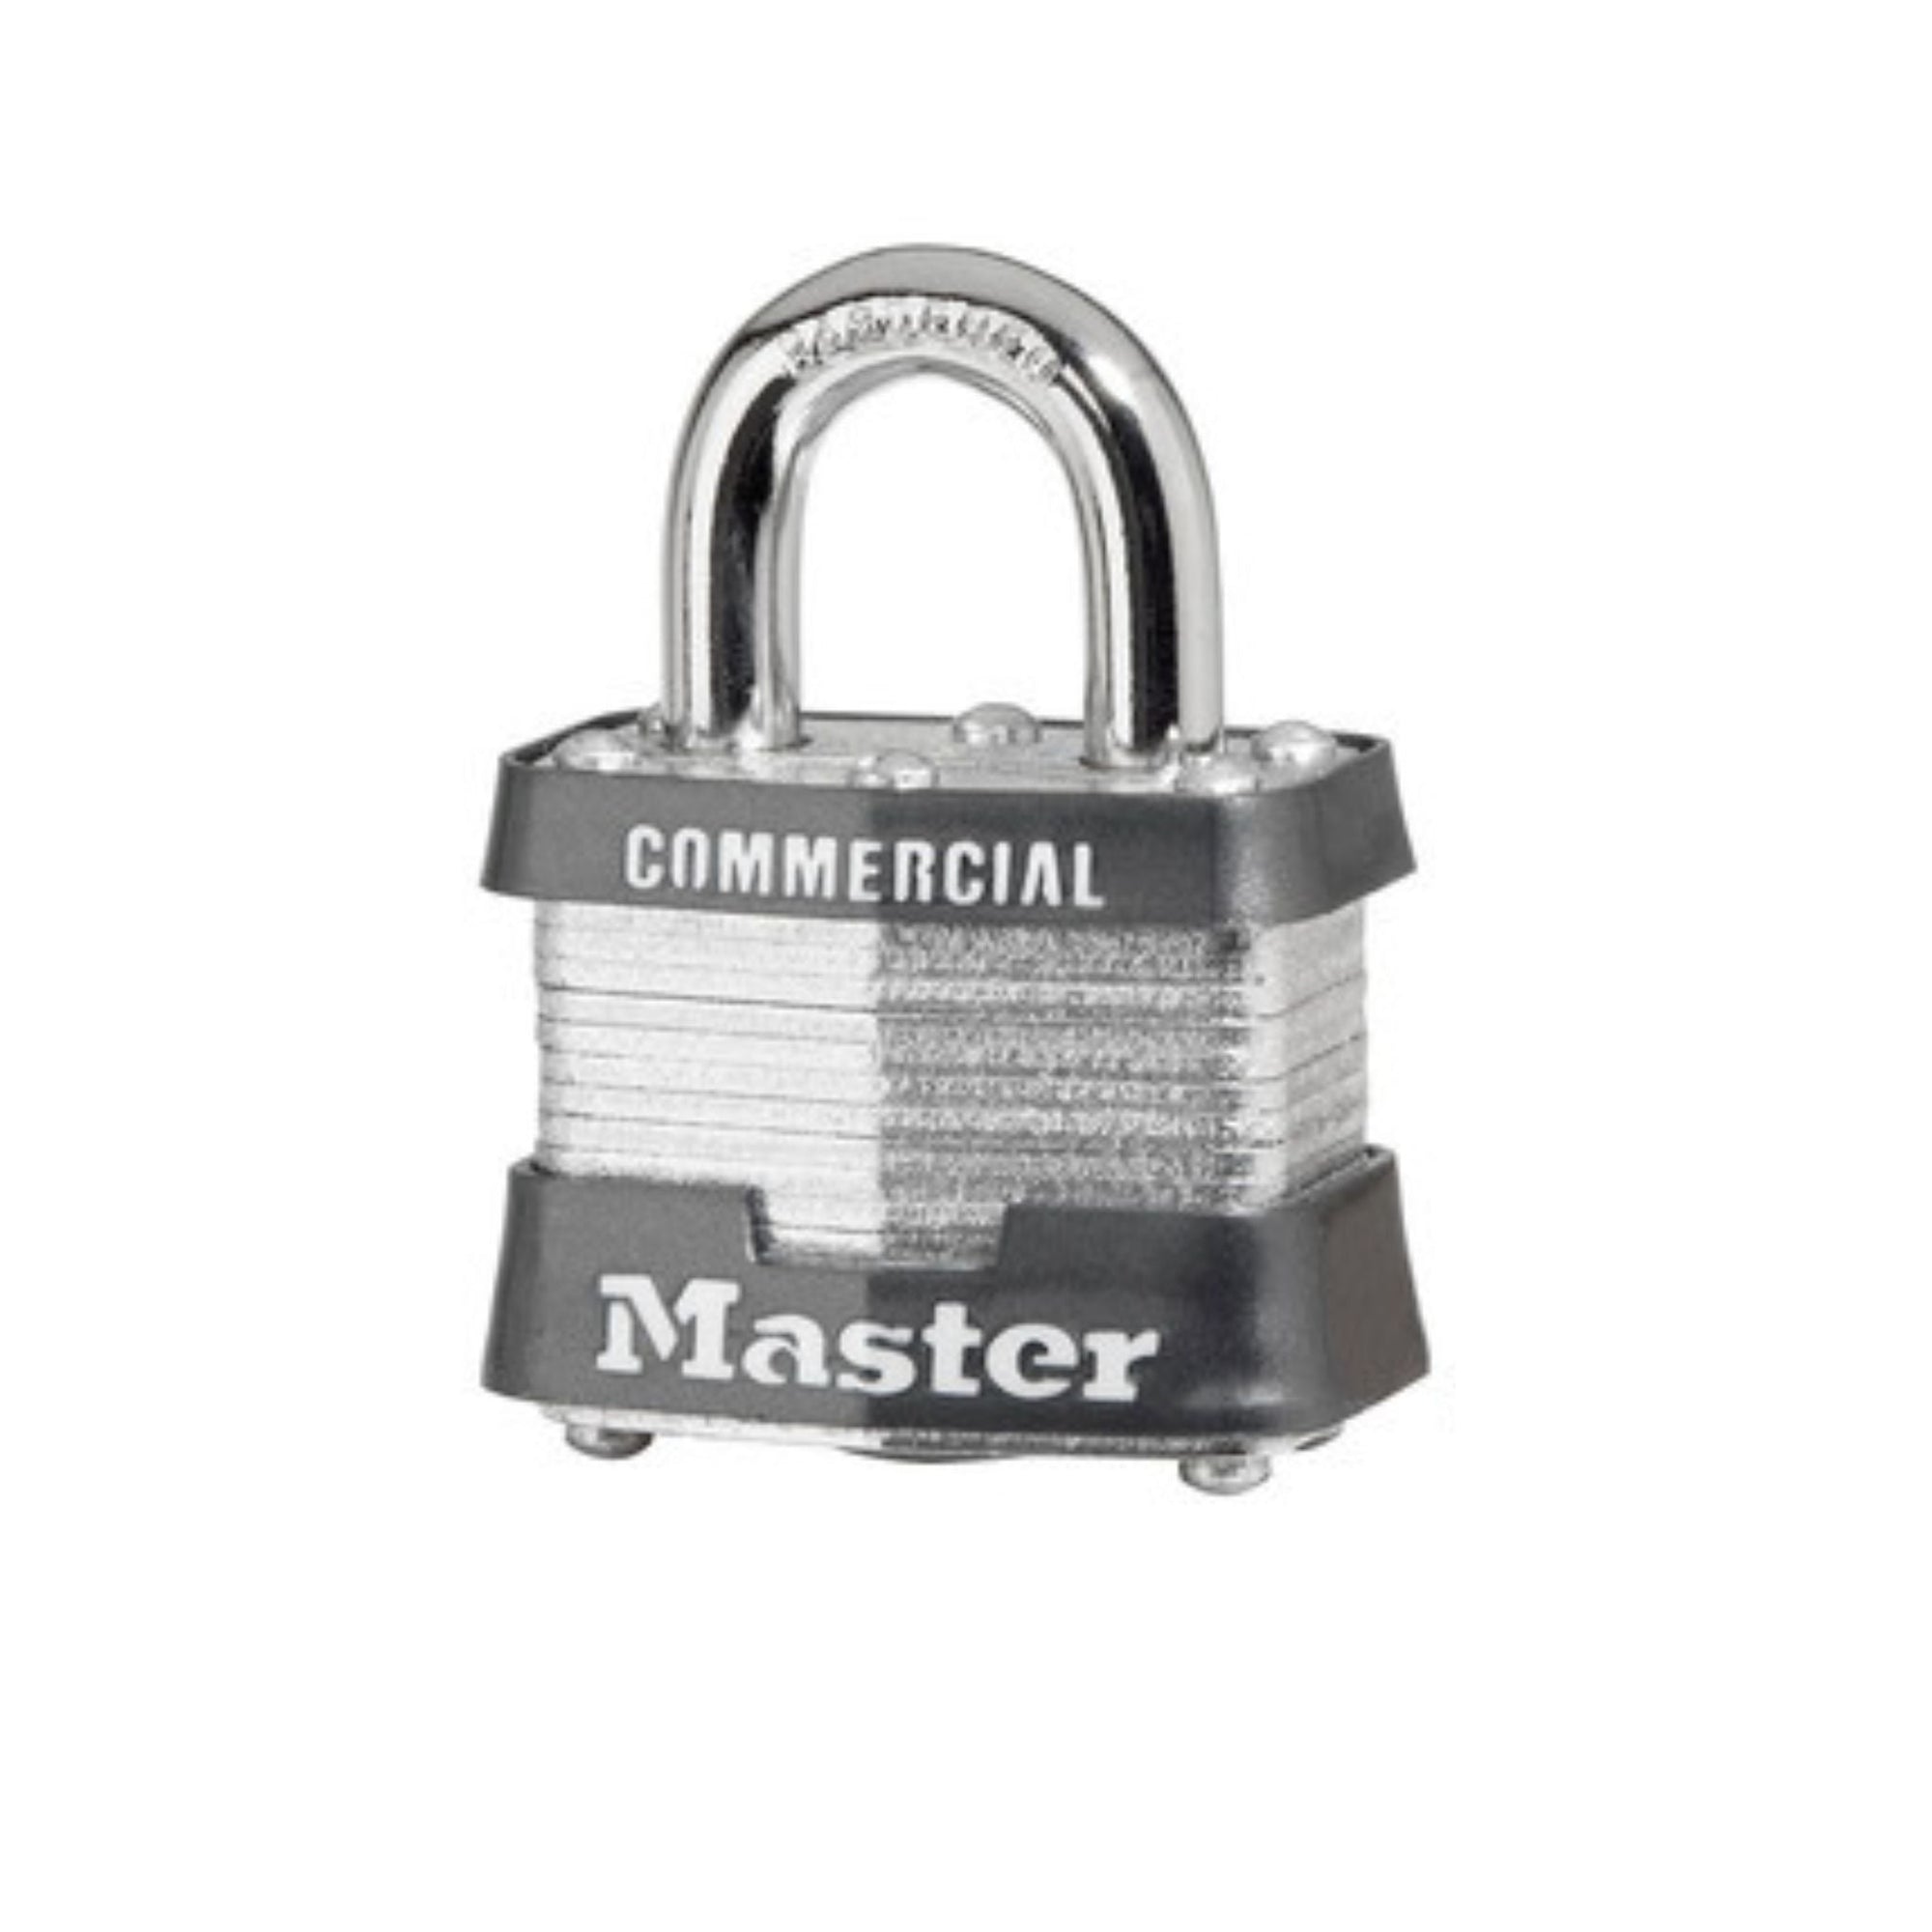 Master Lock 3KA 0307 Lock Laminated steel No. 3 Series Padlock Keyed to Match Existing Key Number KA0307 - The Lock Source